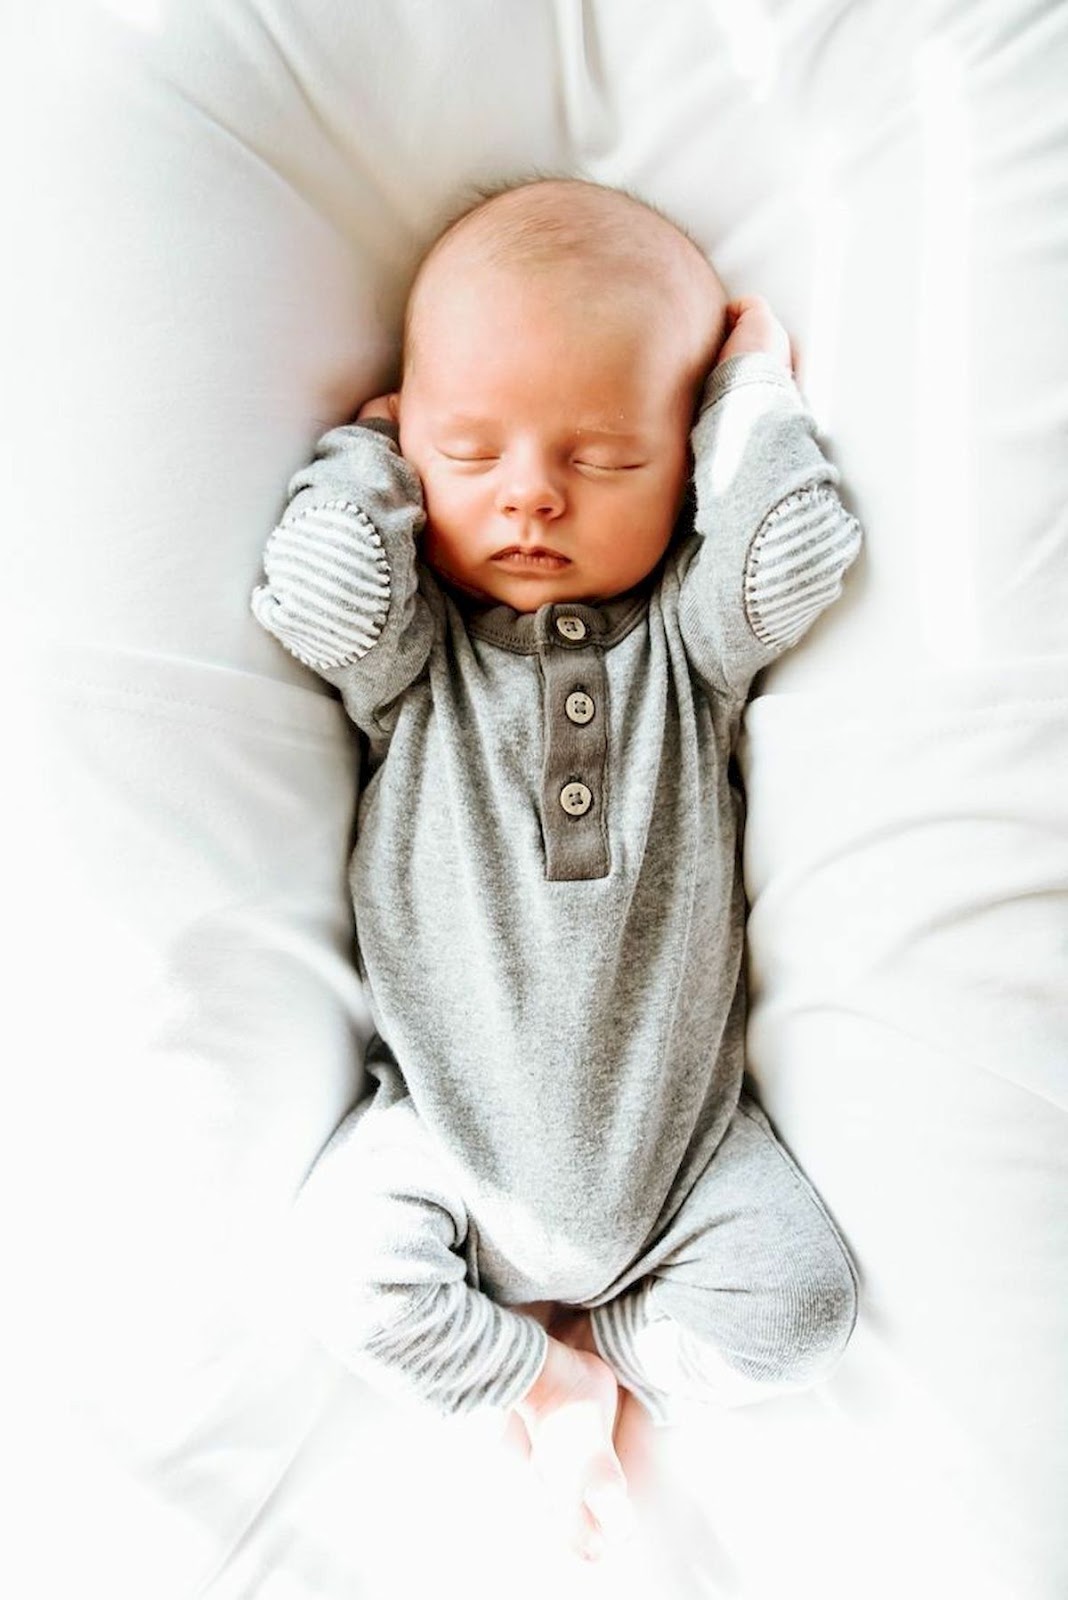 Baby Photos Wallpapers - Cute Newborn Baby Boy Clothes - 1068x1600 Wallpaper  